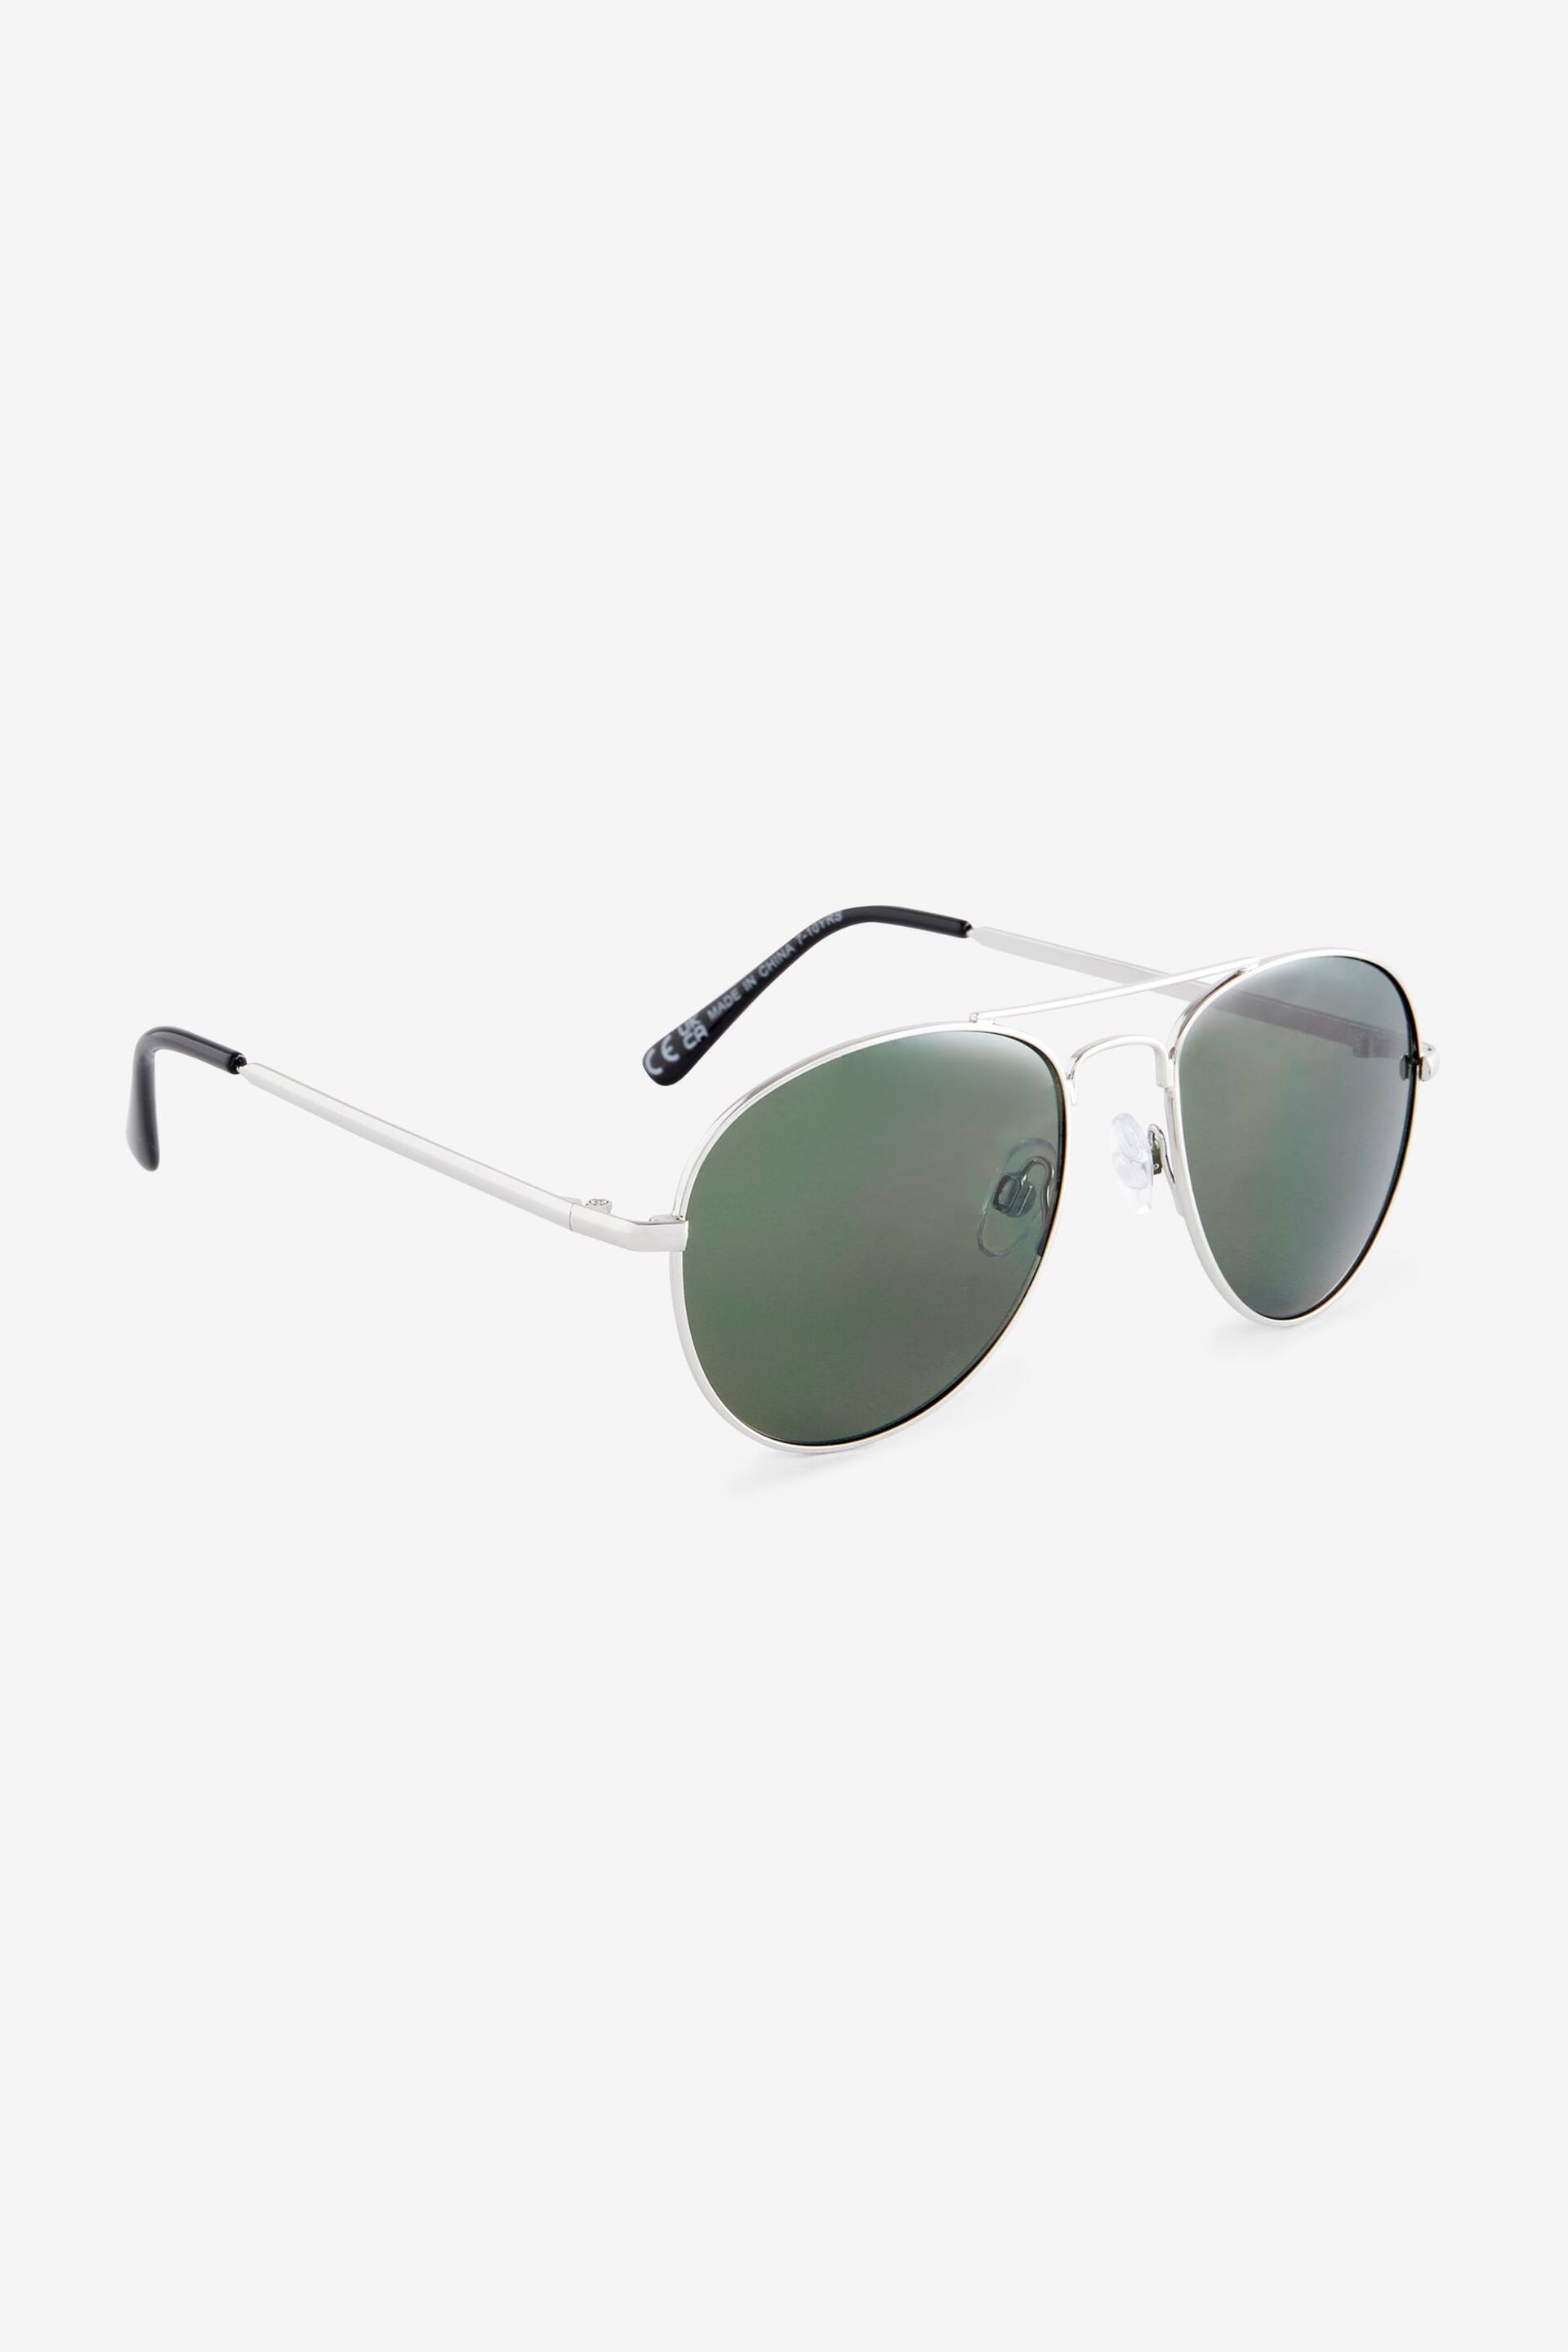 Silver/Khaki Aviator Style Sunglasses - Image 1 of 3